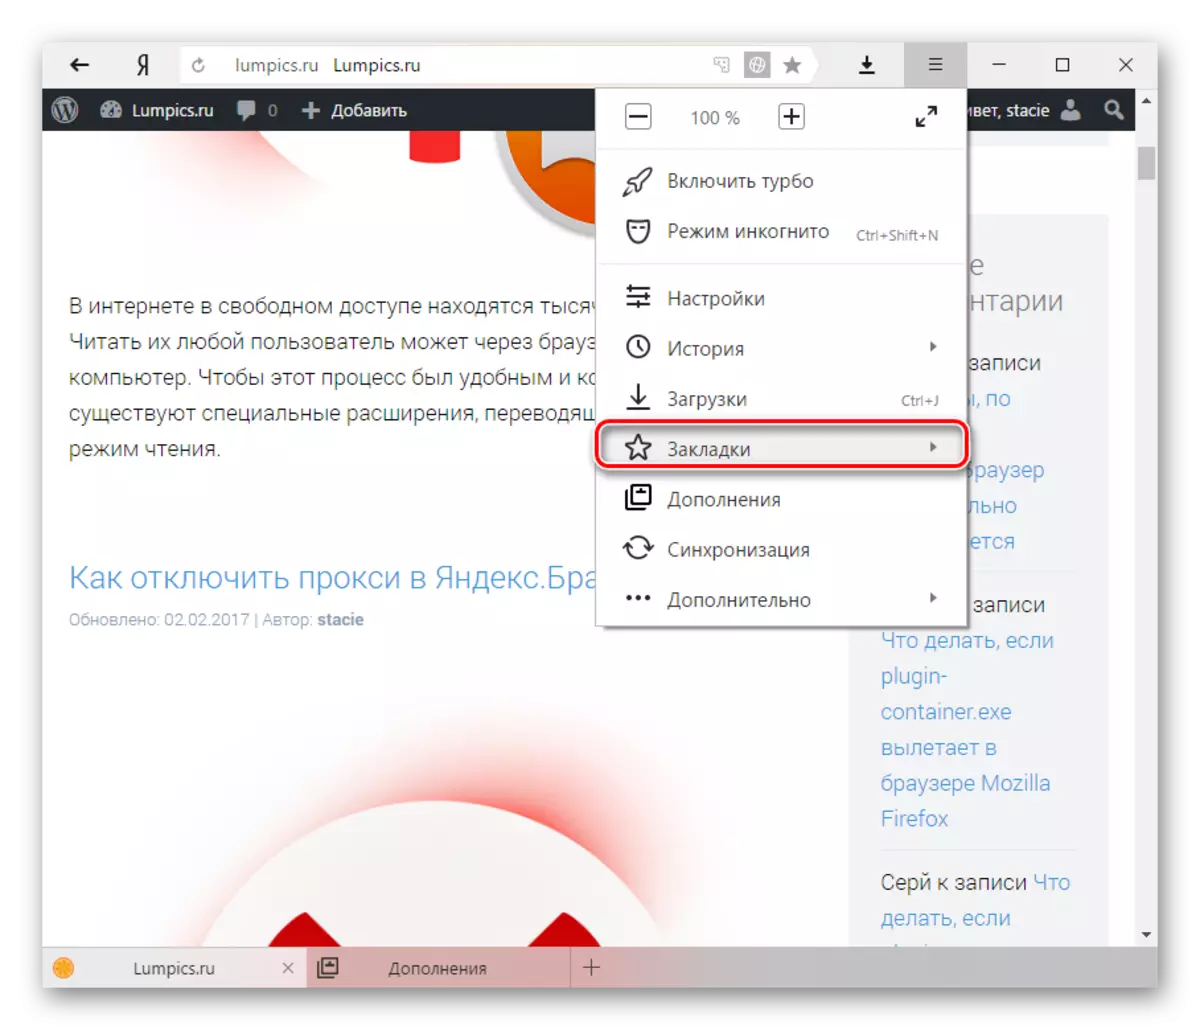 Yandex.browser ರಲ್ಲಿ ಬುಕ್ಮಾರ್ಕ್ಗಳು